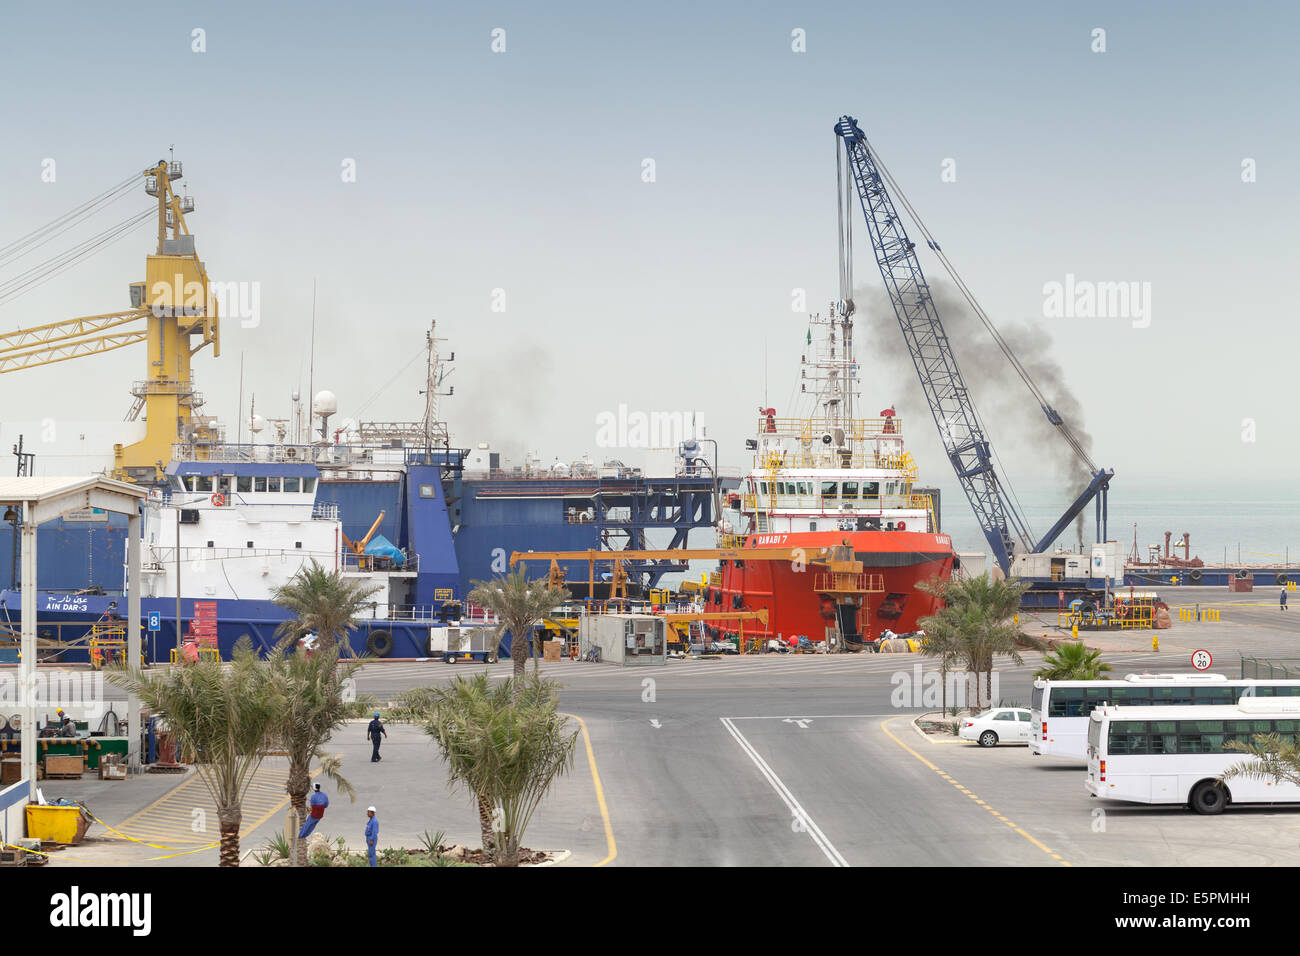 RAS TANURA, SAUDI ARABIA - MAY 13, 2014: Port view with moored ships and workers, Saudi Arabia Stock Photo